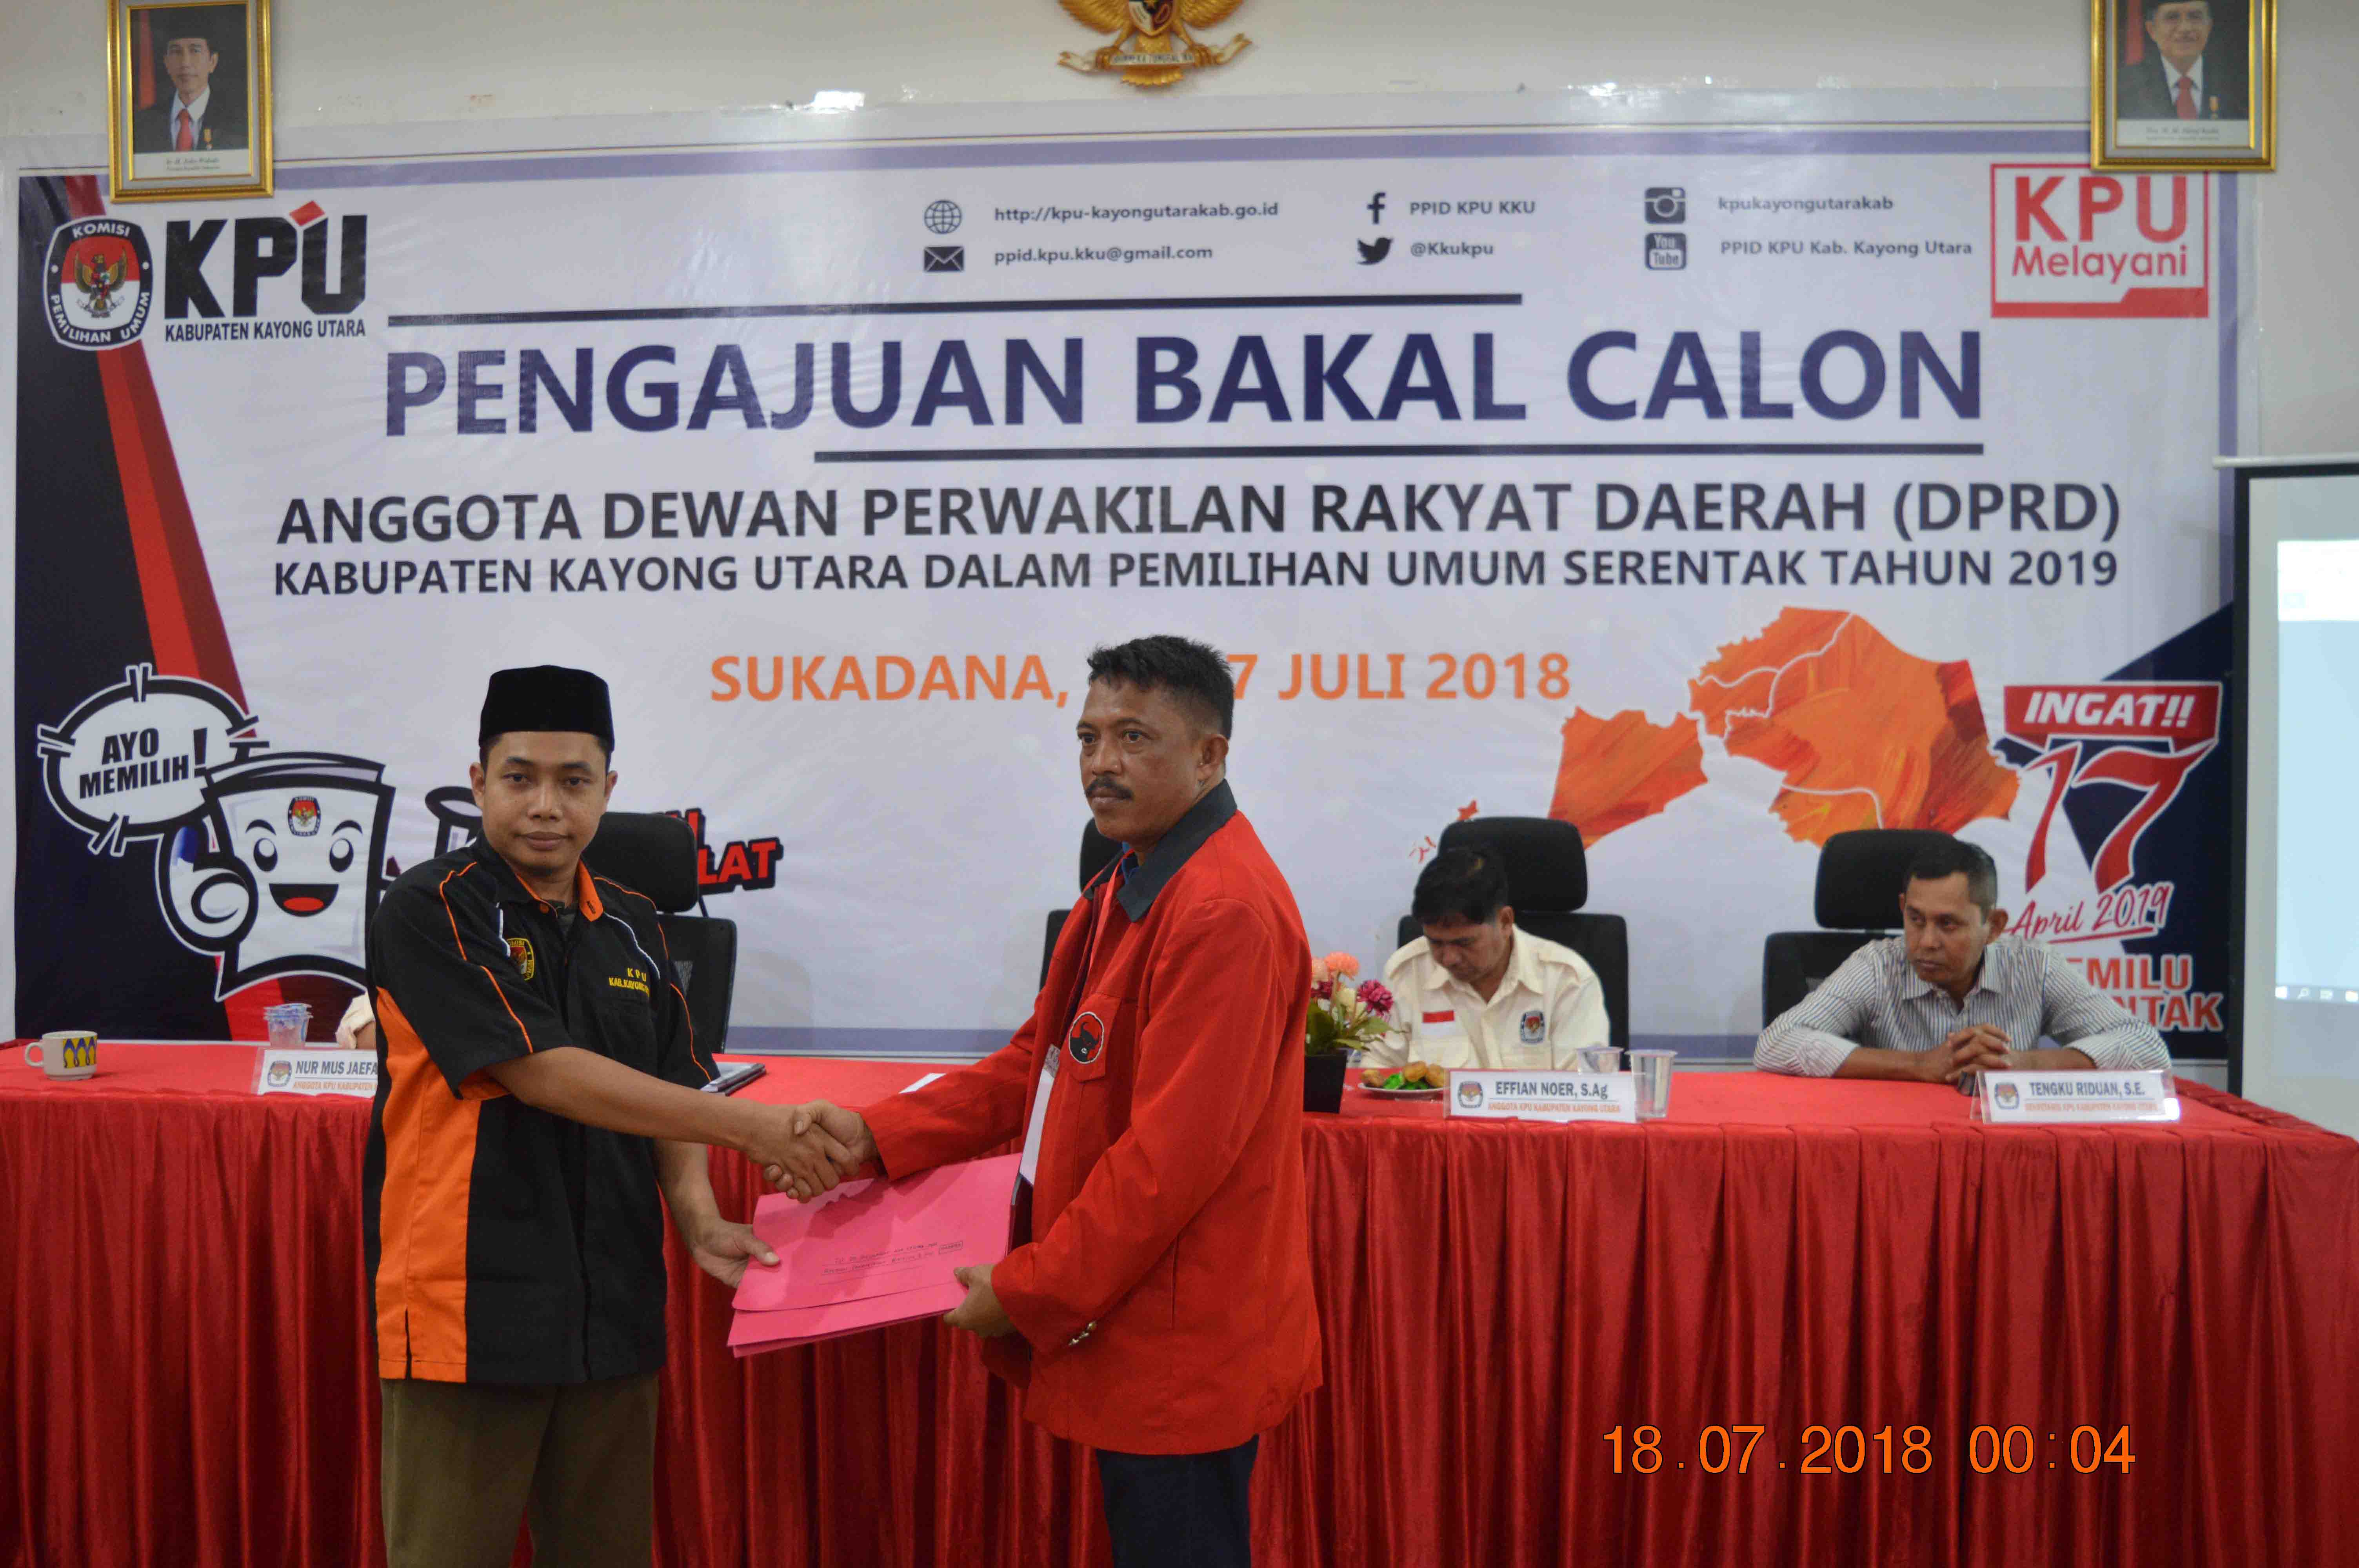 Pengajuan Bakal Calon Anggota DPRD Kabupaten Kayong Utara Pemilu Tahun 2019 (PDI PERJUANGAN)